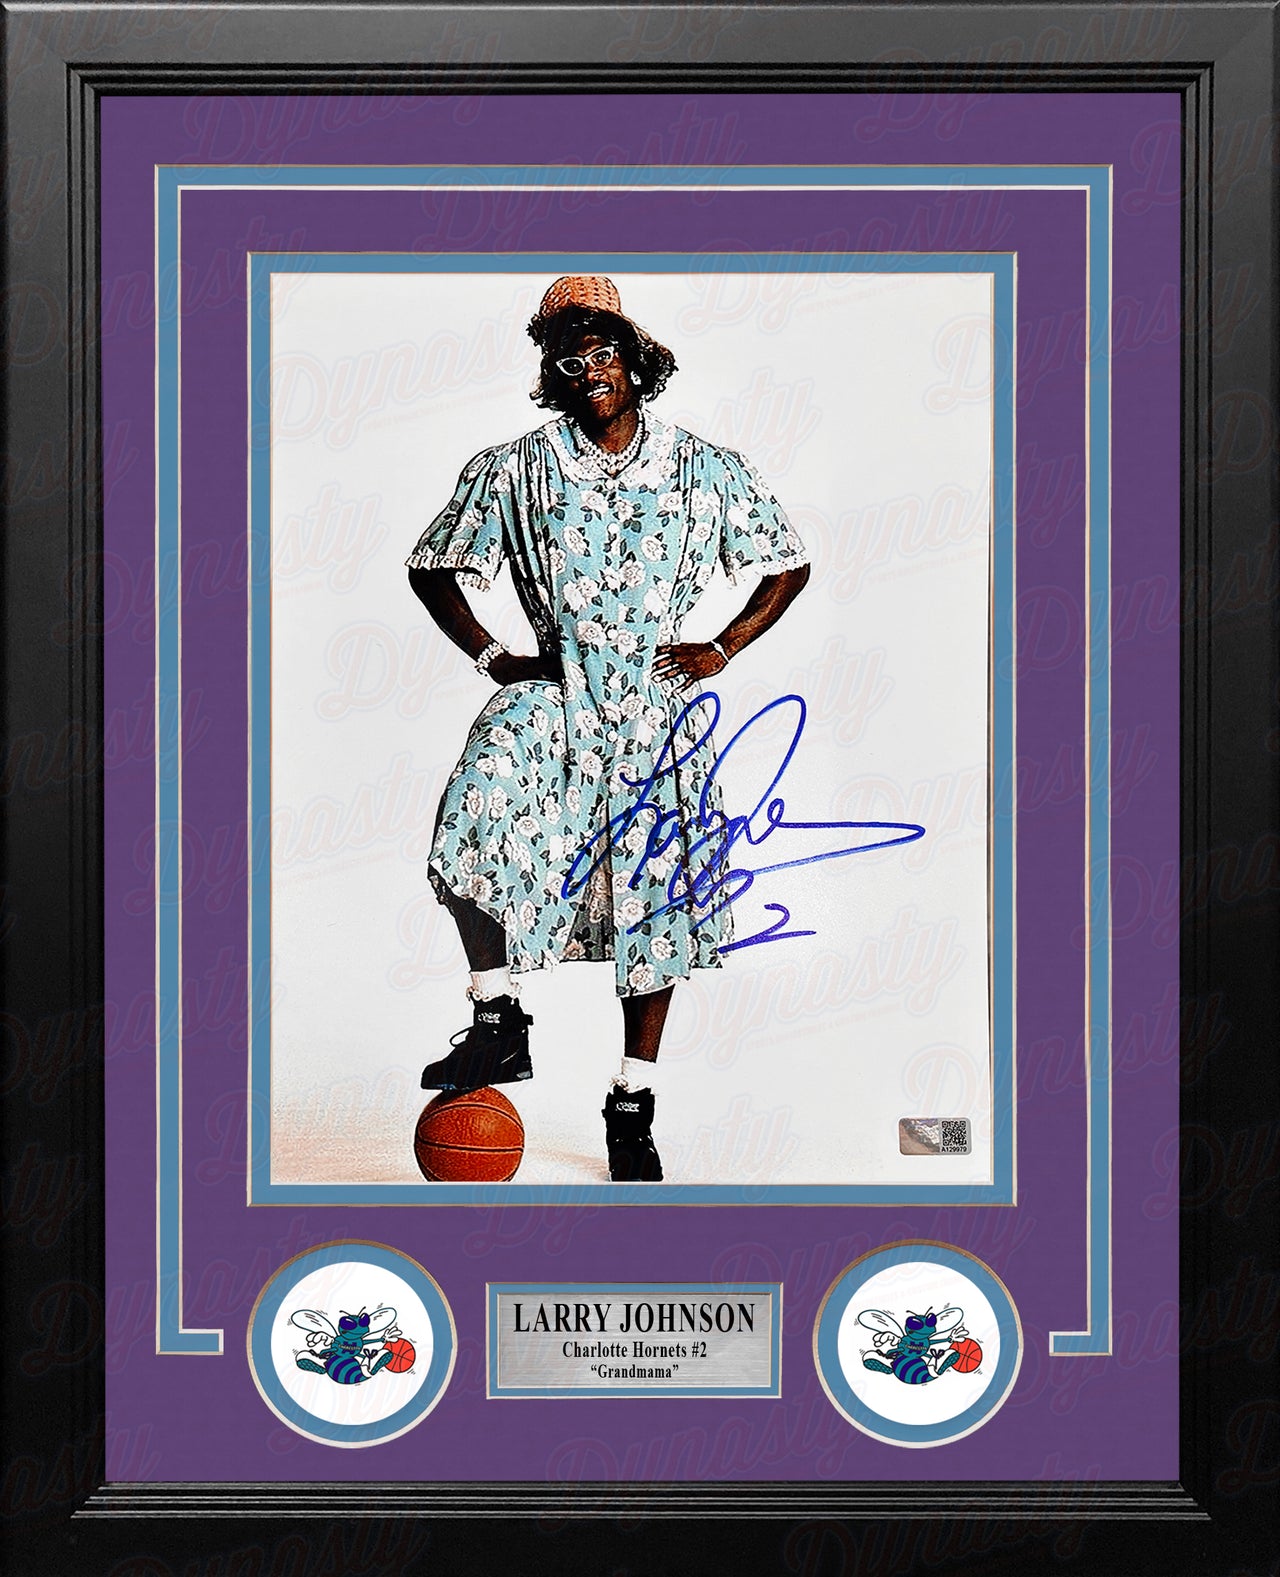 Larry Johnson Grandmama Charlotte Hornets Autographed 8" x 10" Framed Basketball Photo - Dynasty Sports & Framing 